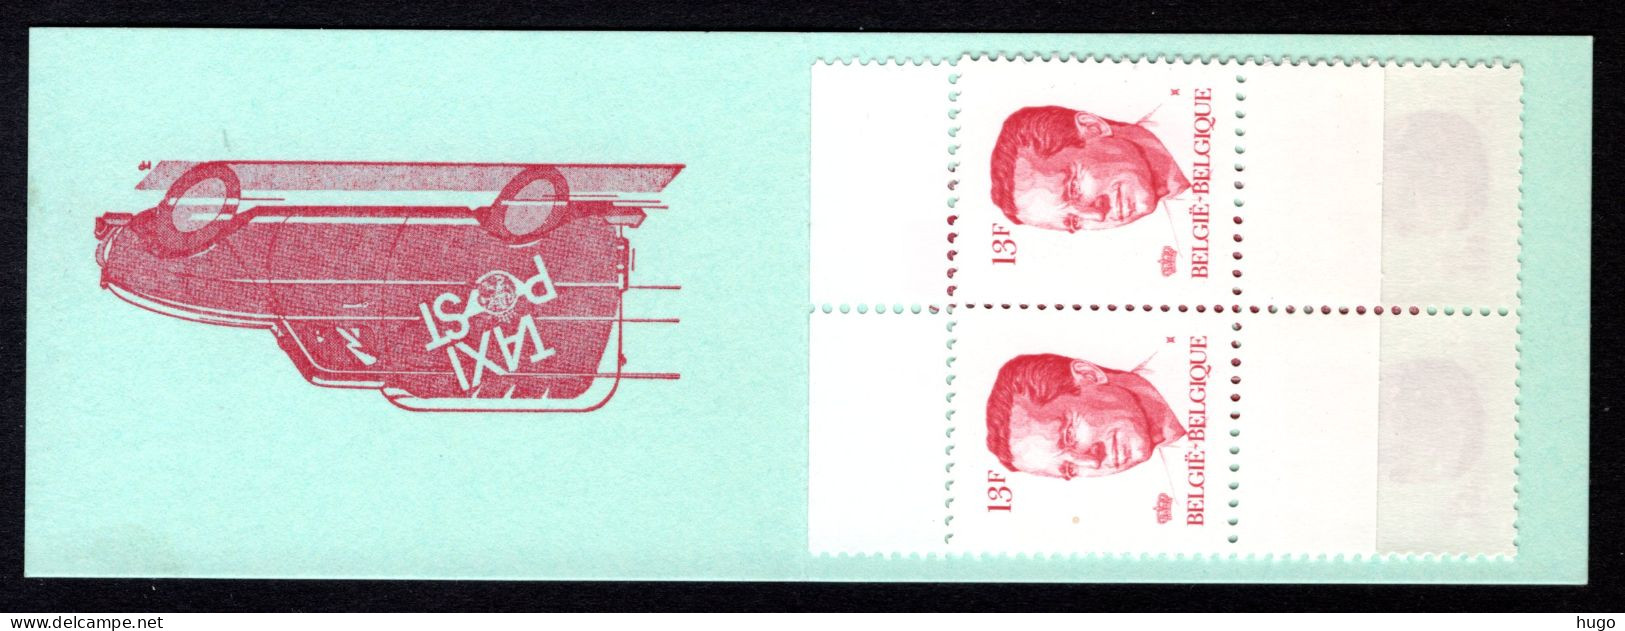 B18-V MNH 1986 - Postzegelboekje - Variëteit Auto Naar Boven - 1953-2006 Modernos [B]